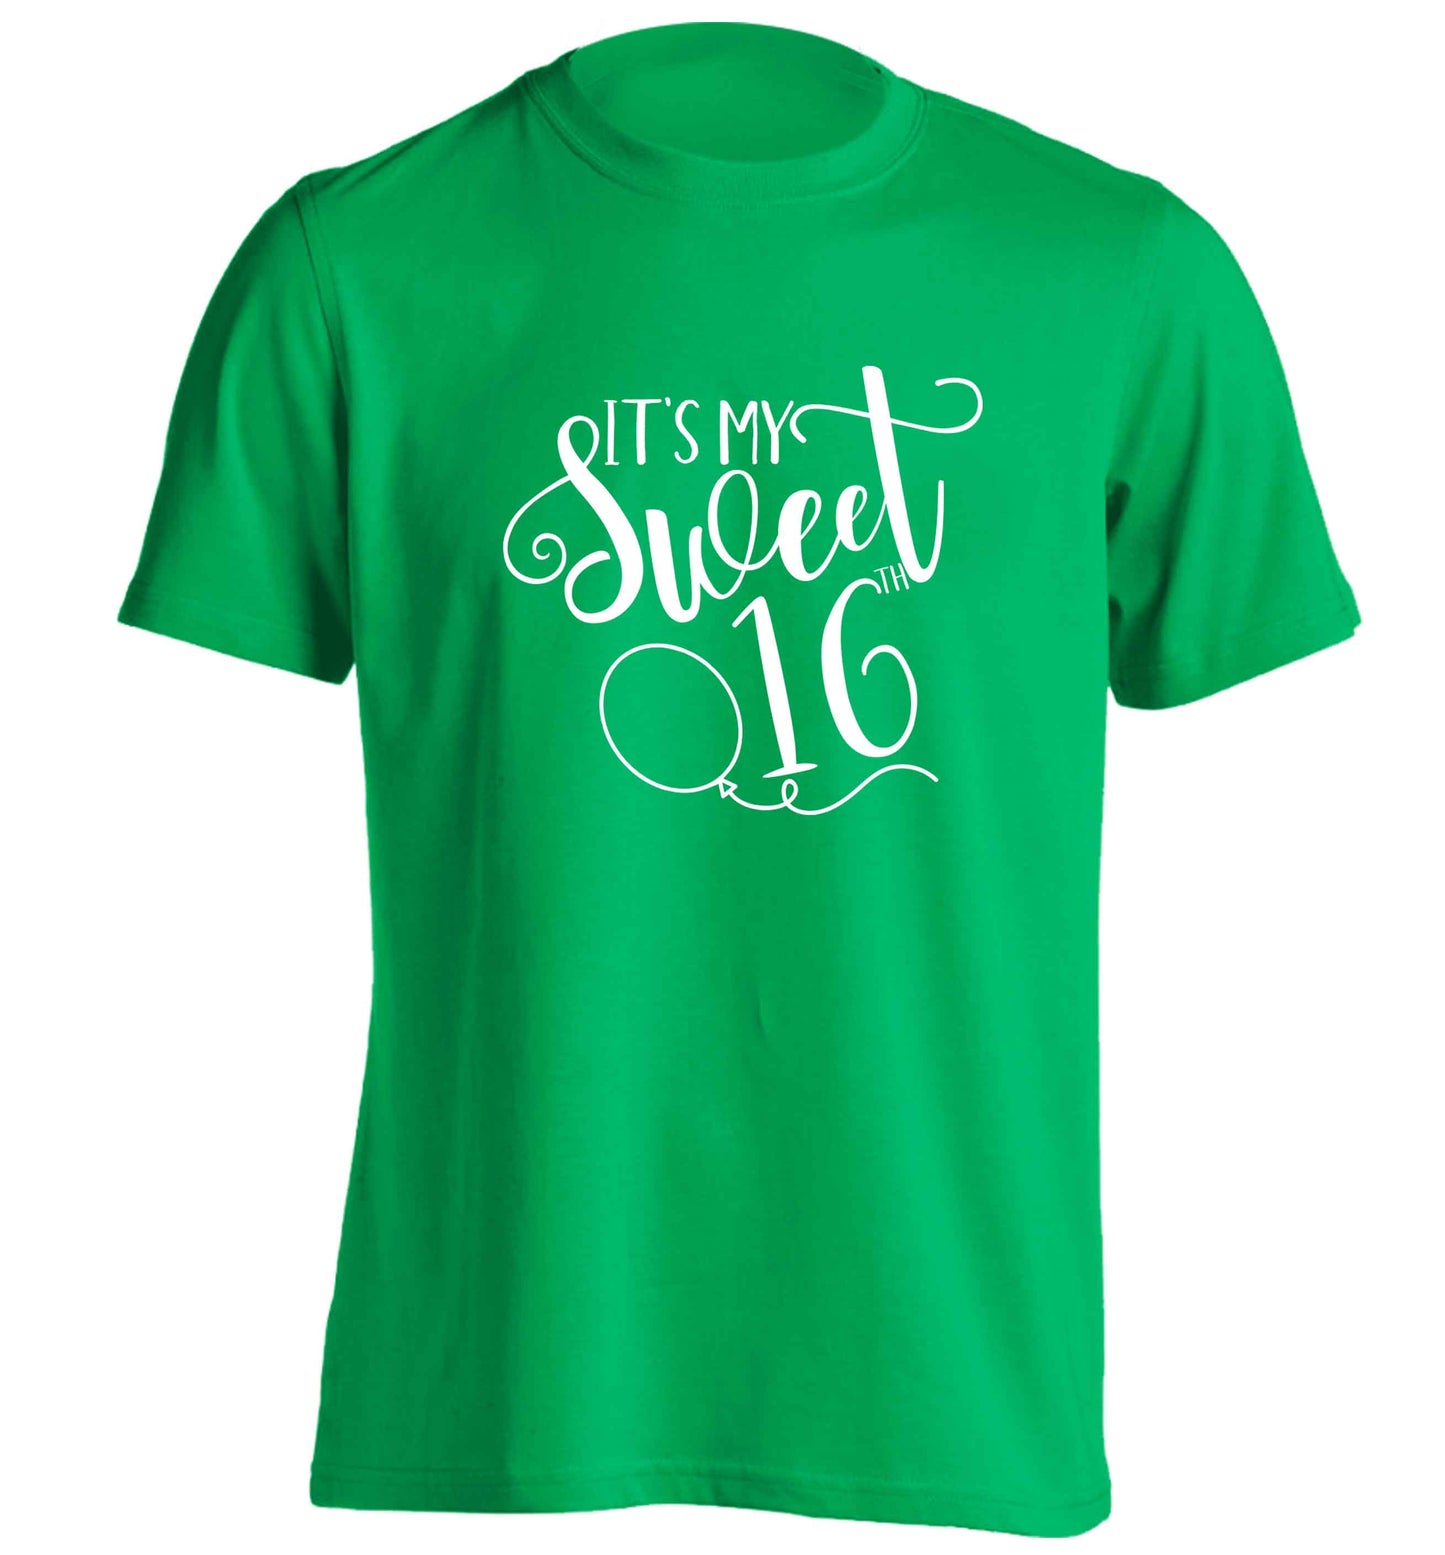 It's my sweet 16thadults unisex green Tshirt 2XL